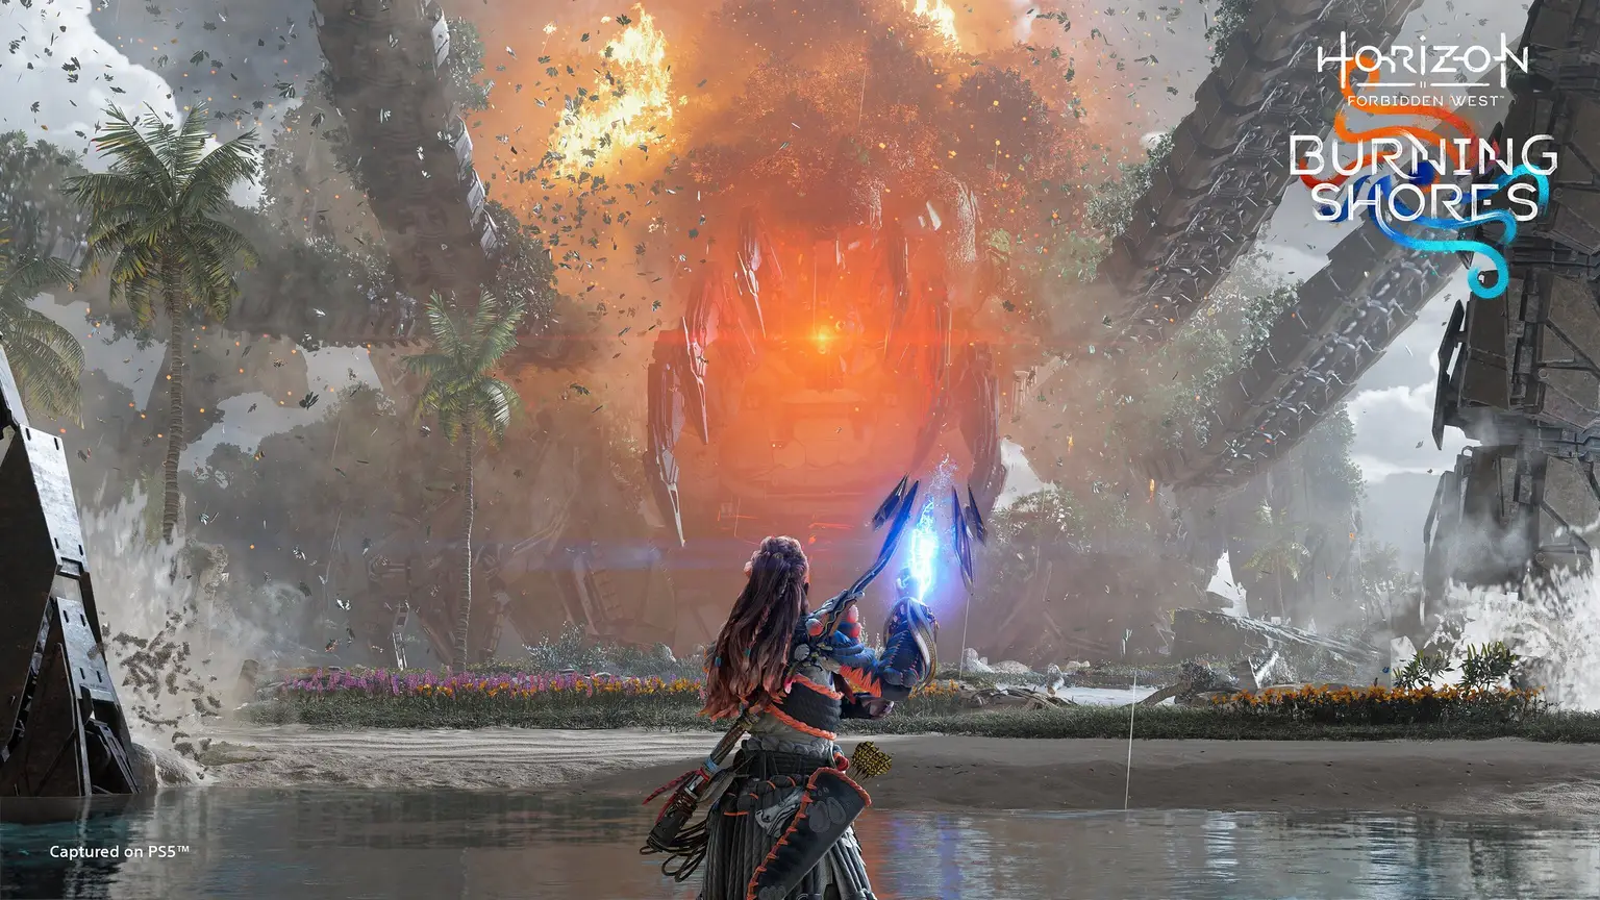 Horizon Forbidden West DLC 'Burning Shores' announced for PS5